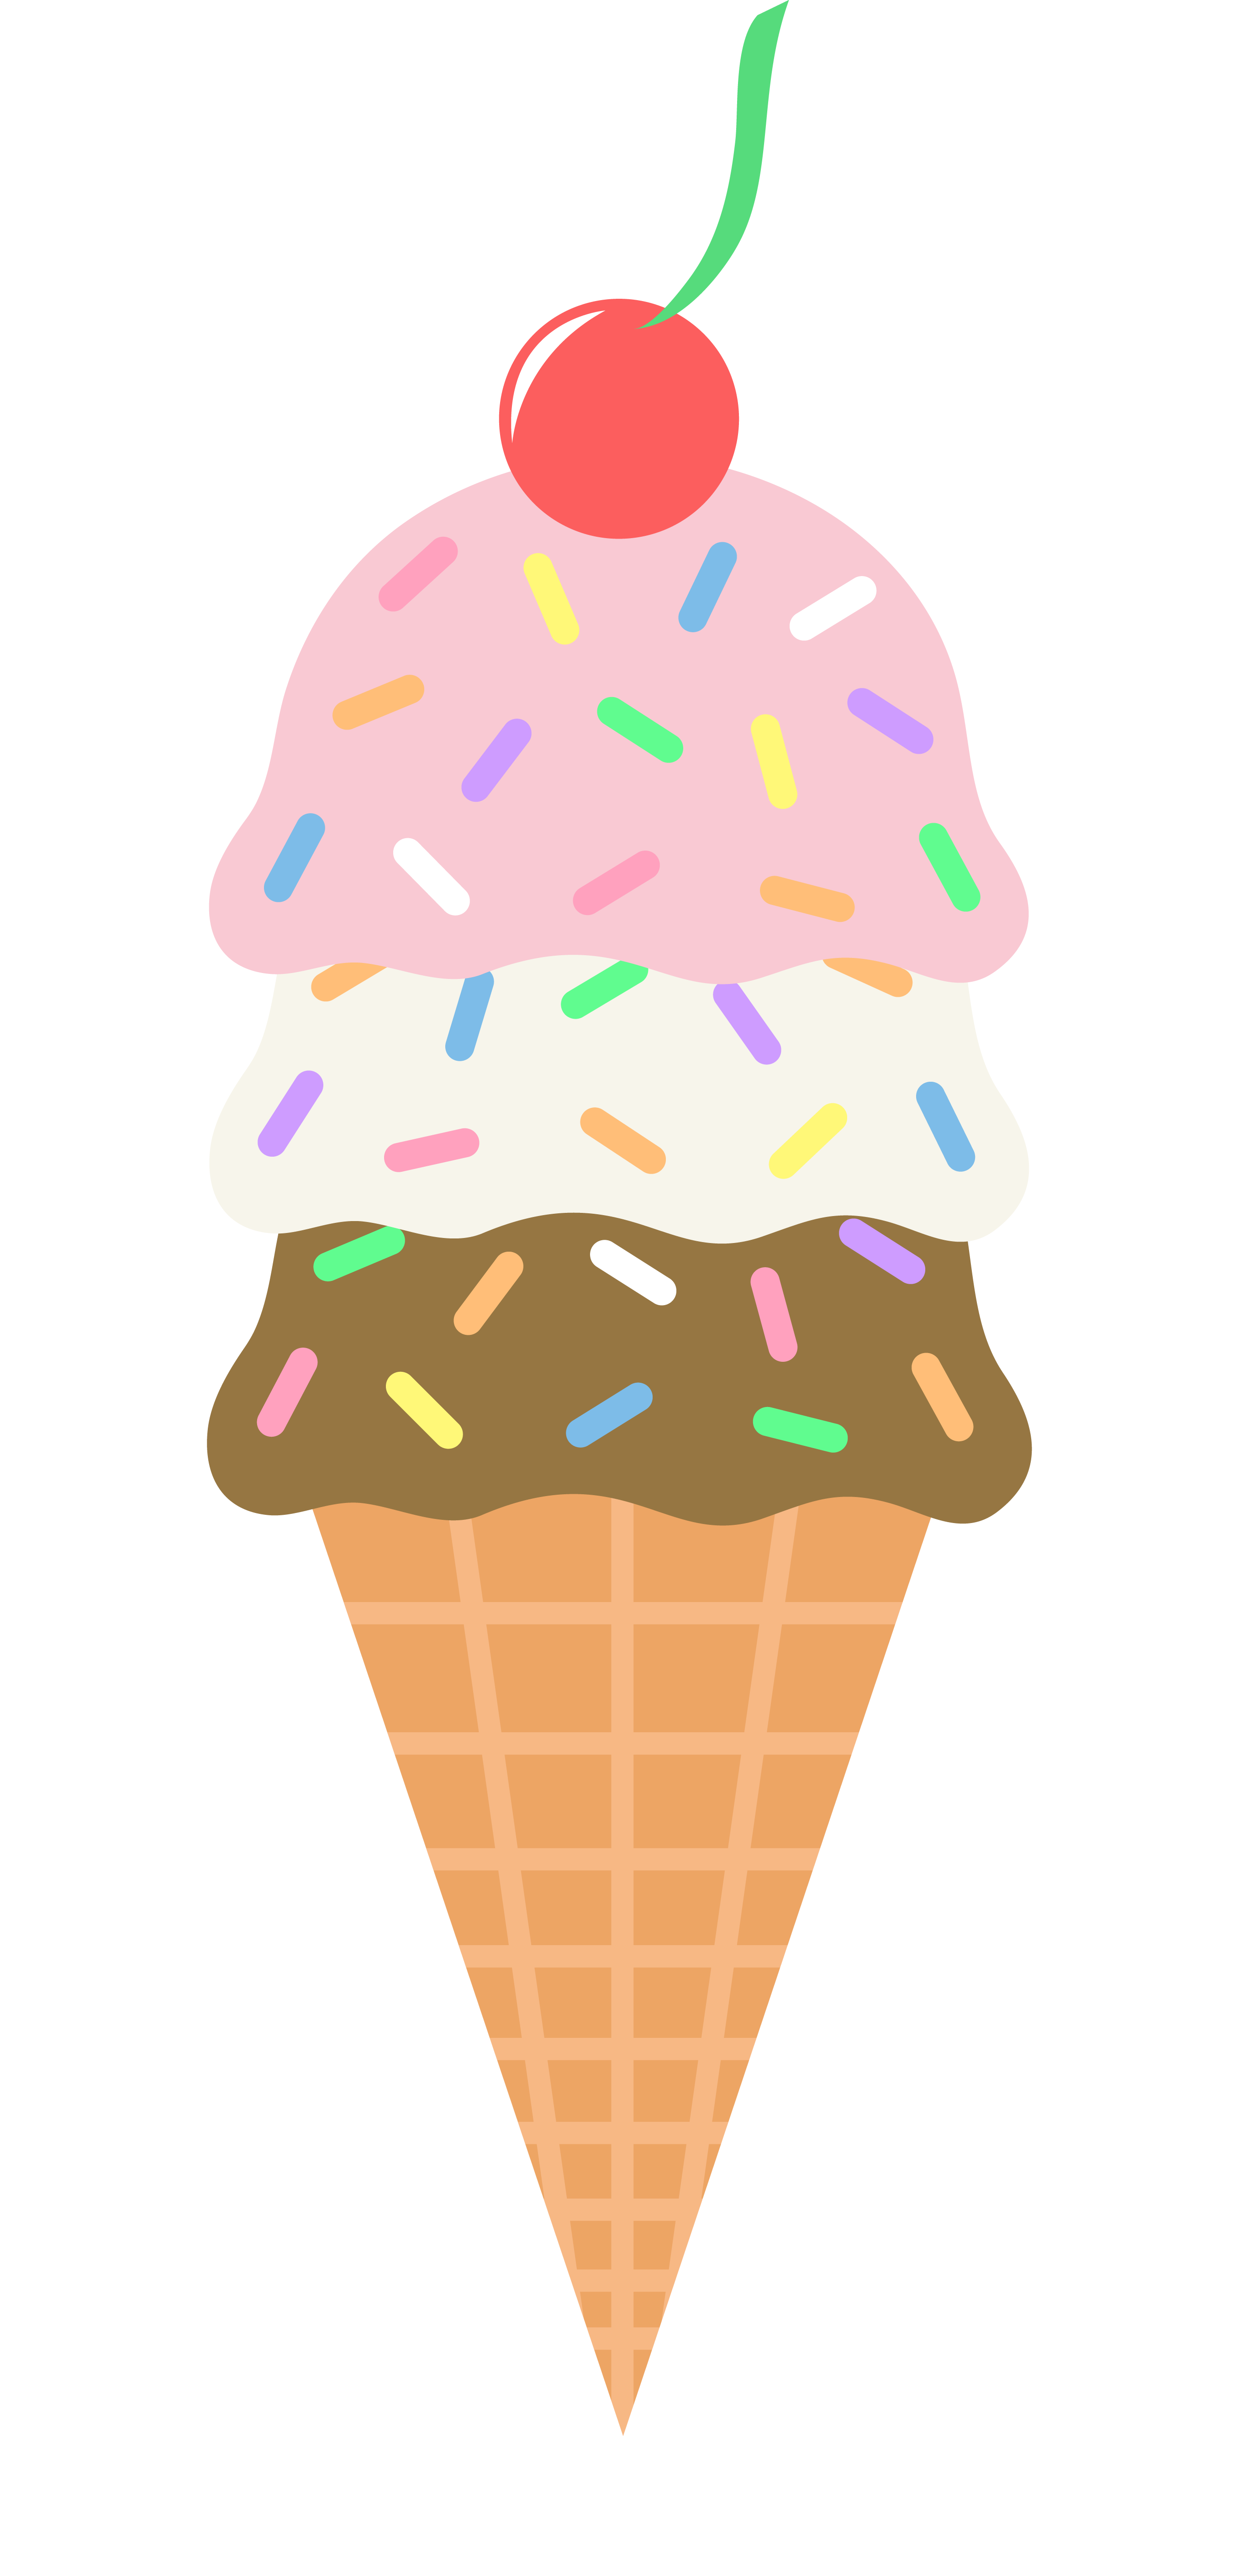 Neapolitan Ice Cream Cone With Sprinkles.